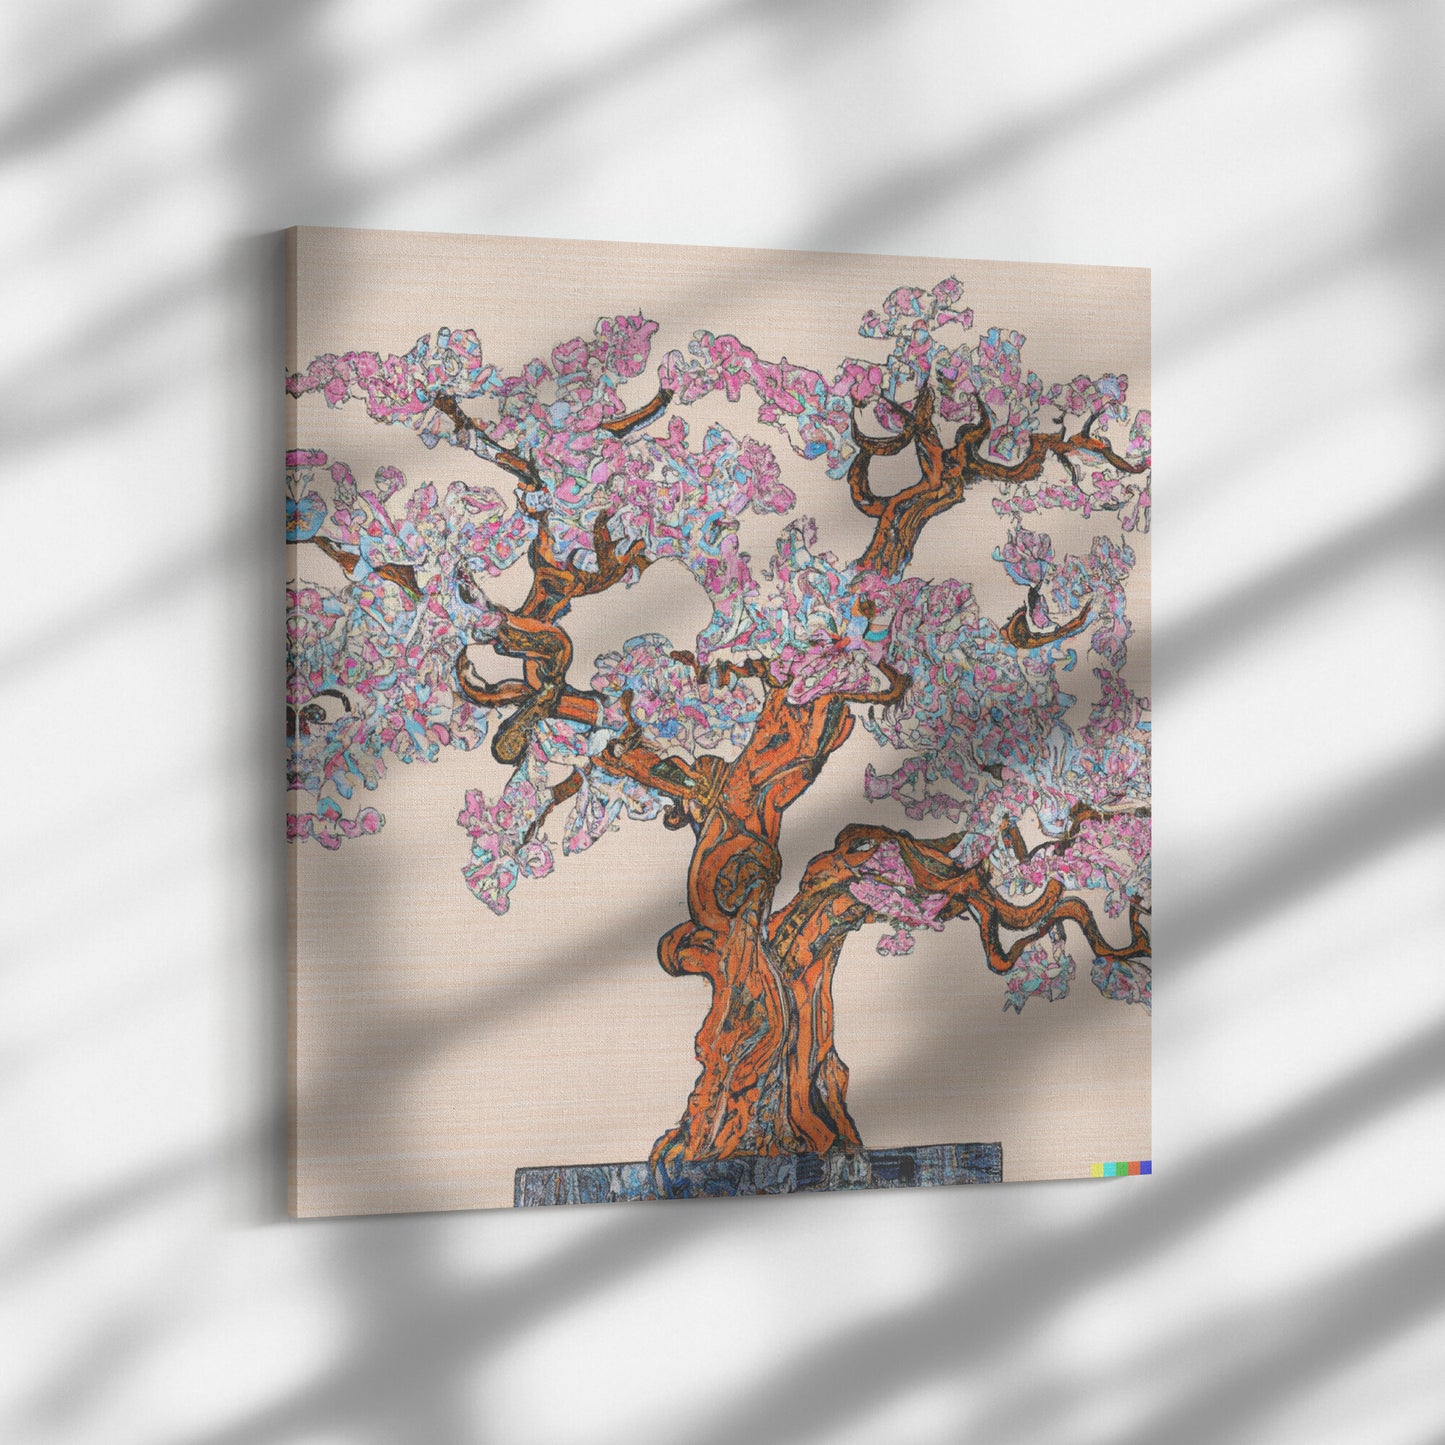 Japanese Nihonga Art, Wabi-Sabi Decor, Painting of a Cherry Tree